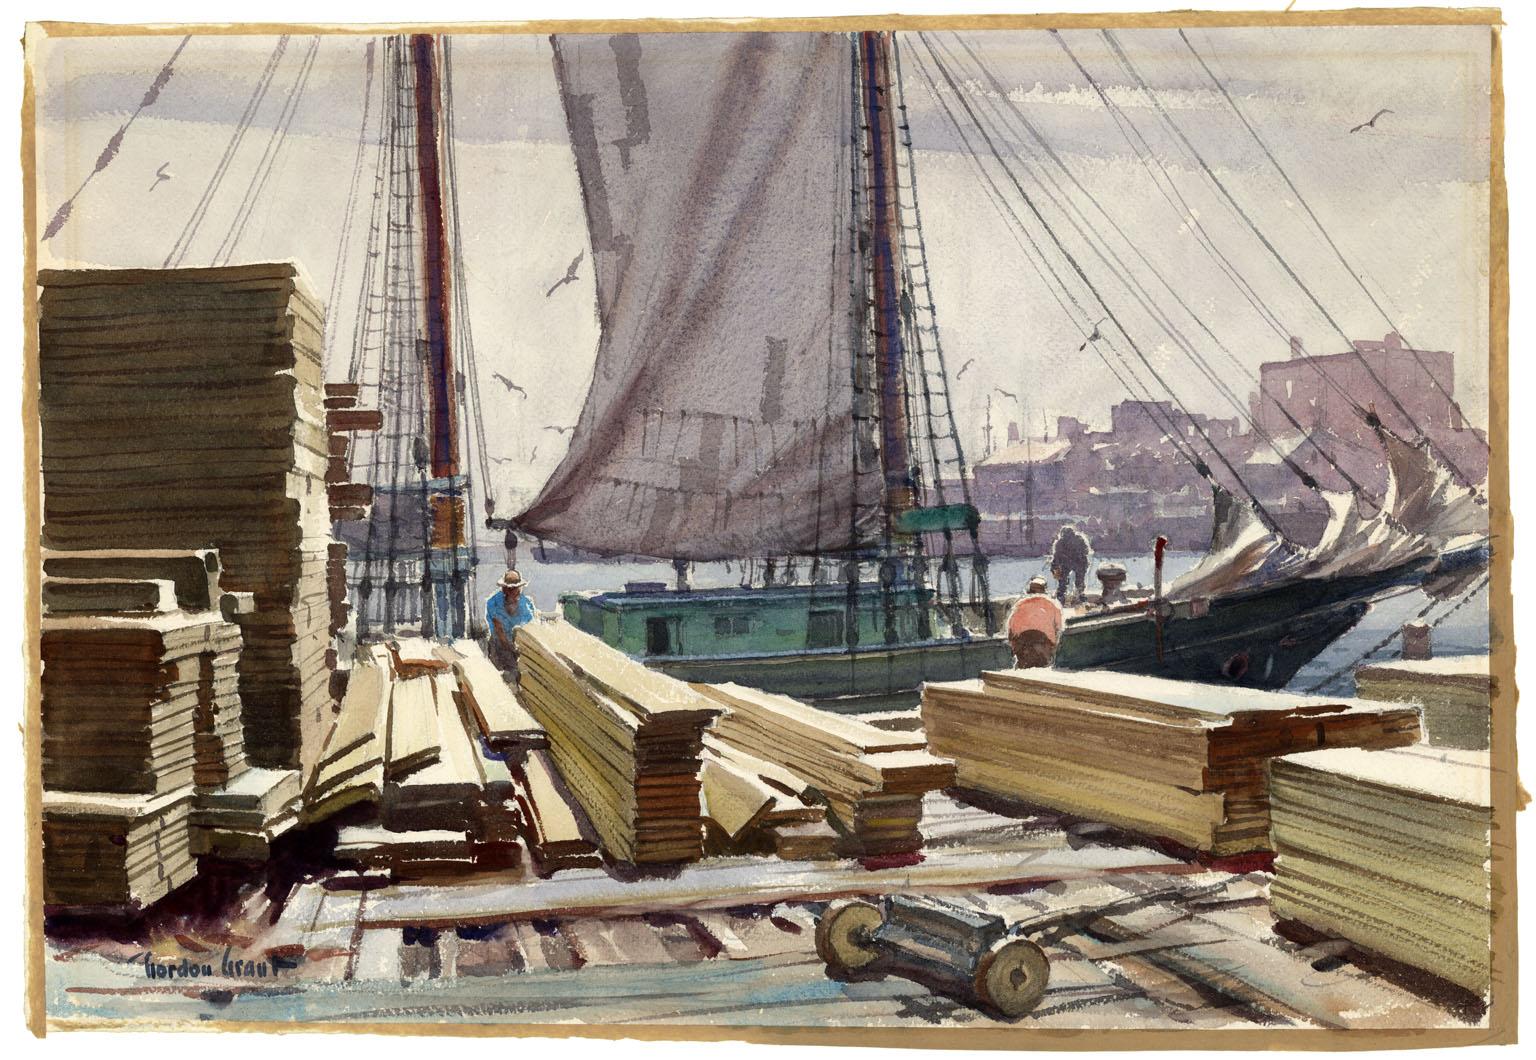 Lumber Wharf, Leuchtturm – Art von Gordon Grant